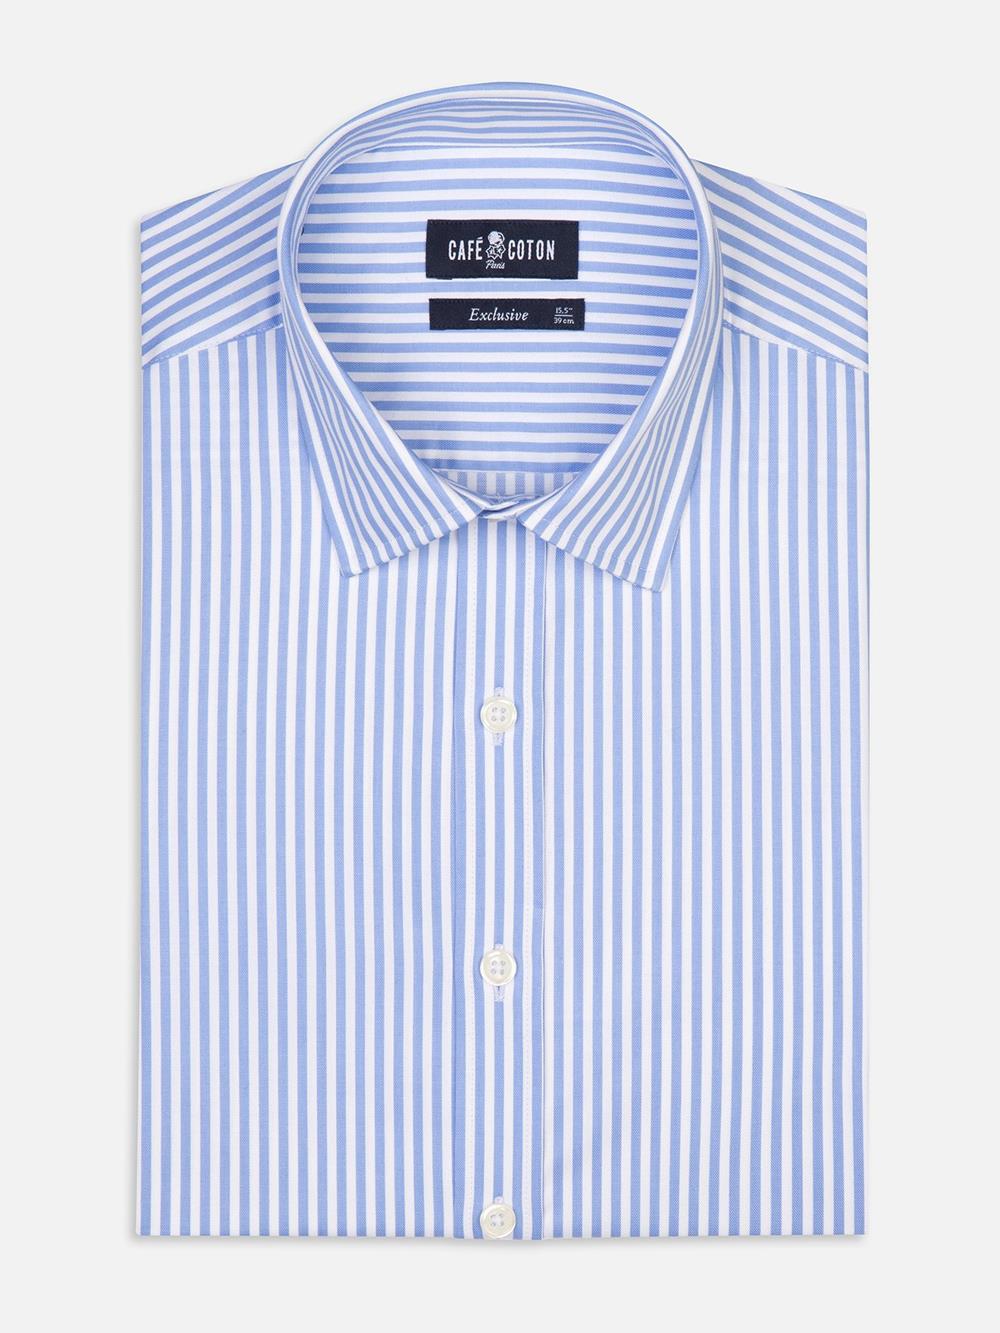 Nick sky blue striped slim fit shirt - Small collar